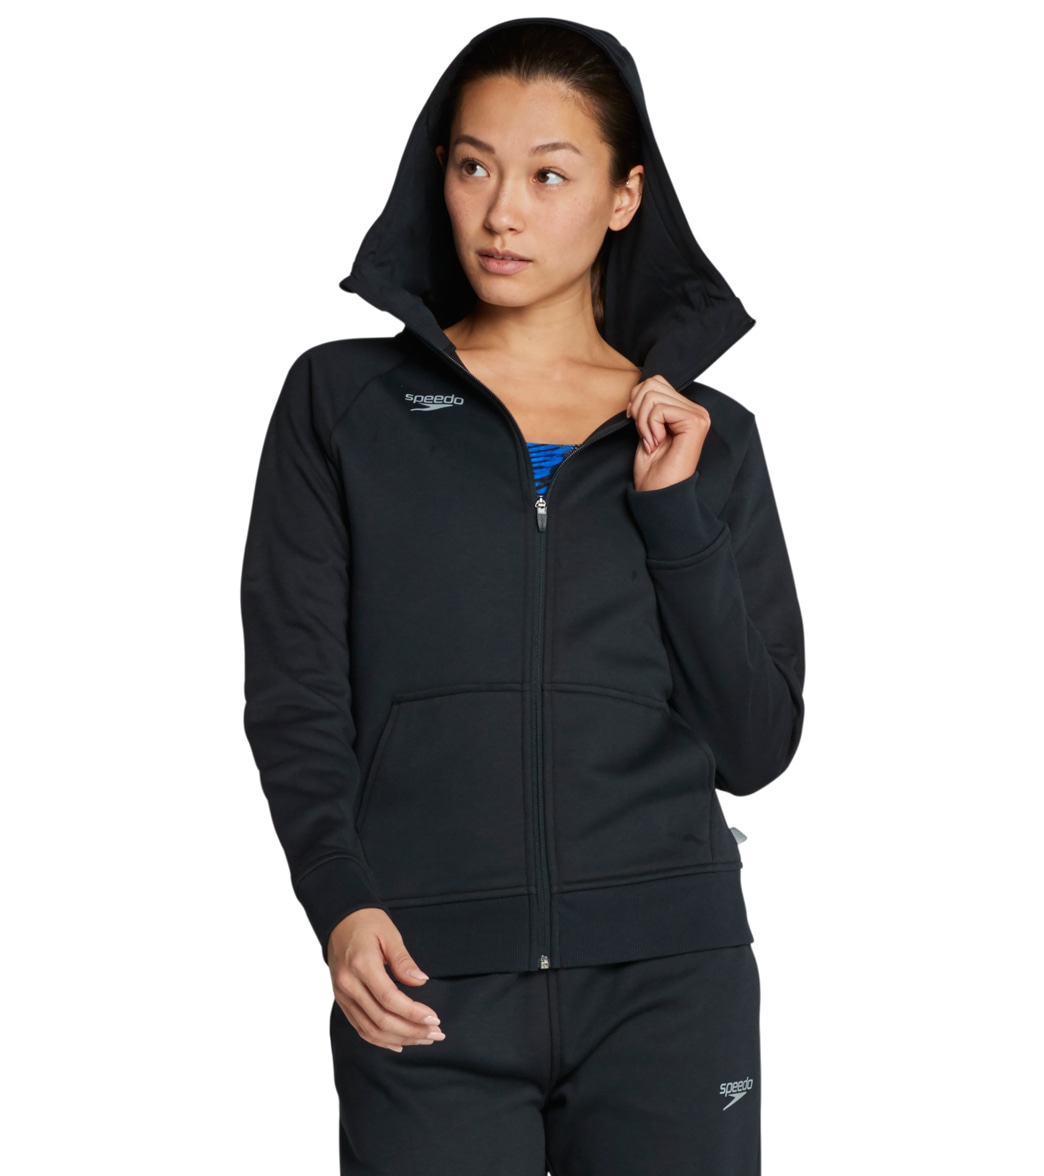 Speedo Women's Team Jacket - Black Large Size Large Cotton/Polyester - Swimoutlet.com